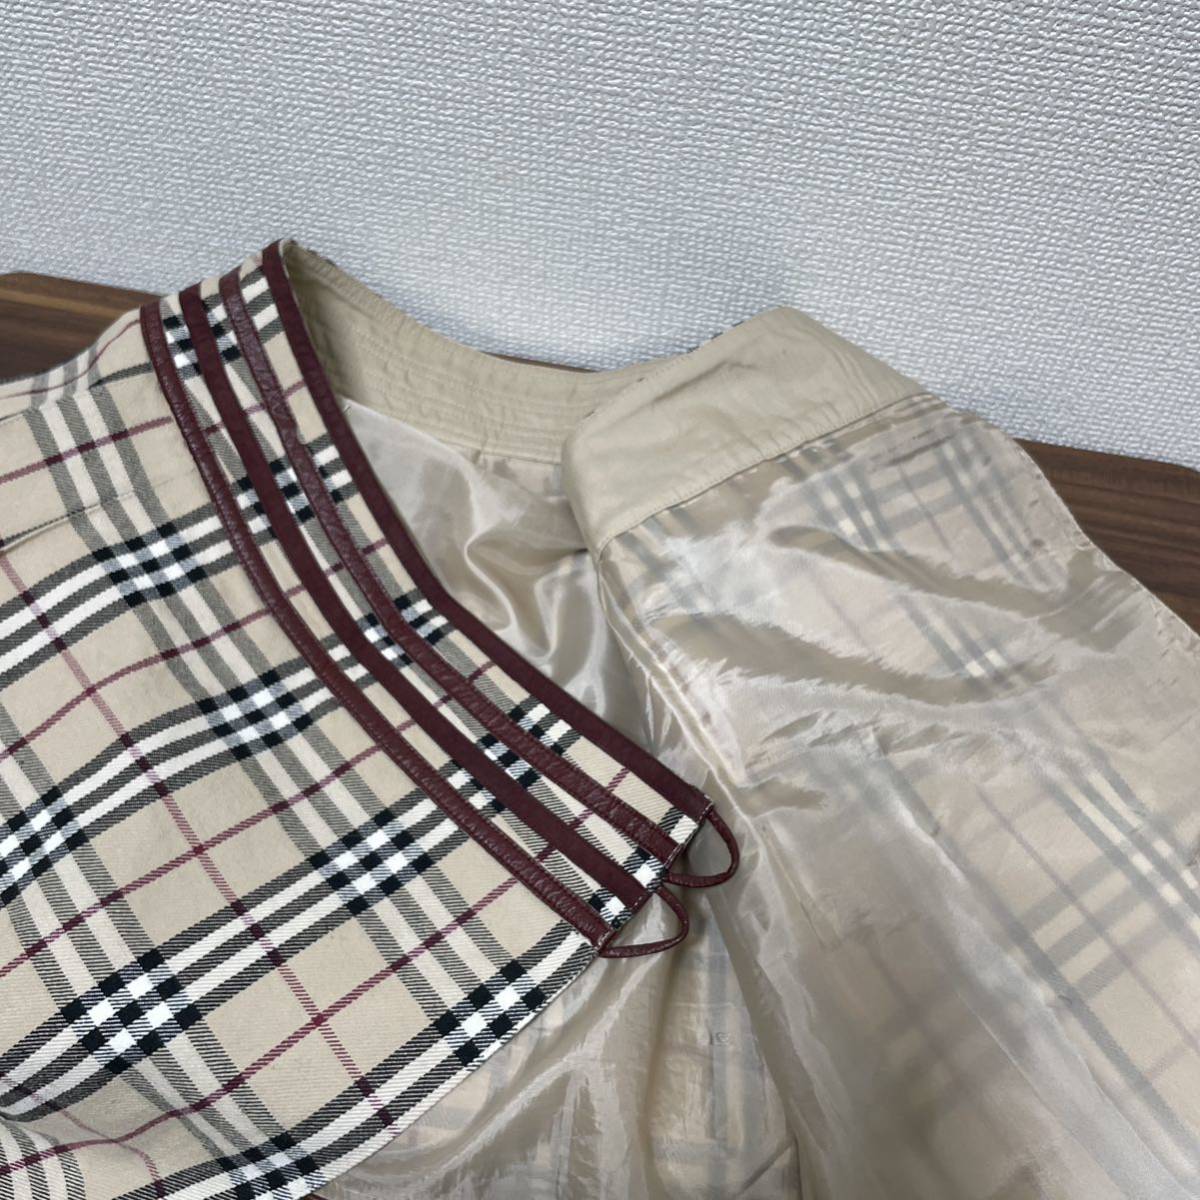  Burberry Blue Label to coil skirt miniskirt flap noba check pattern 